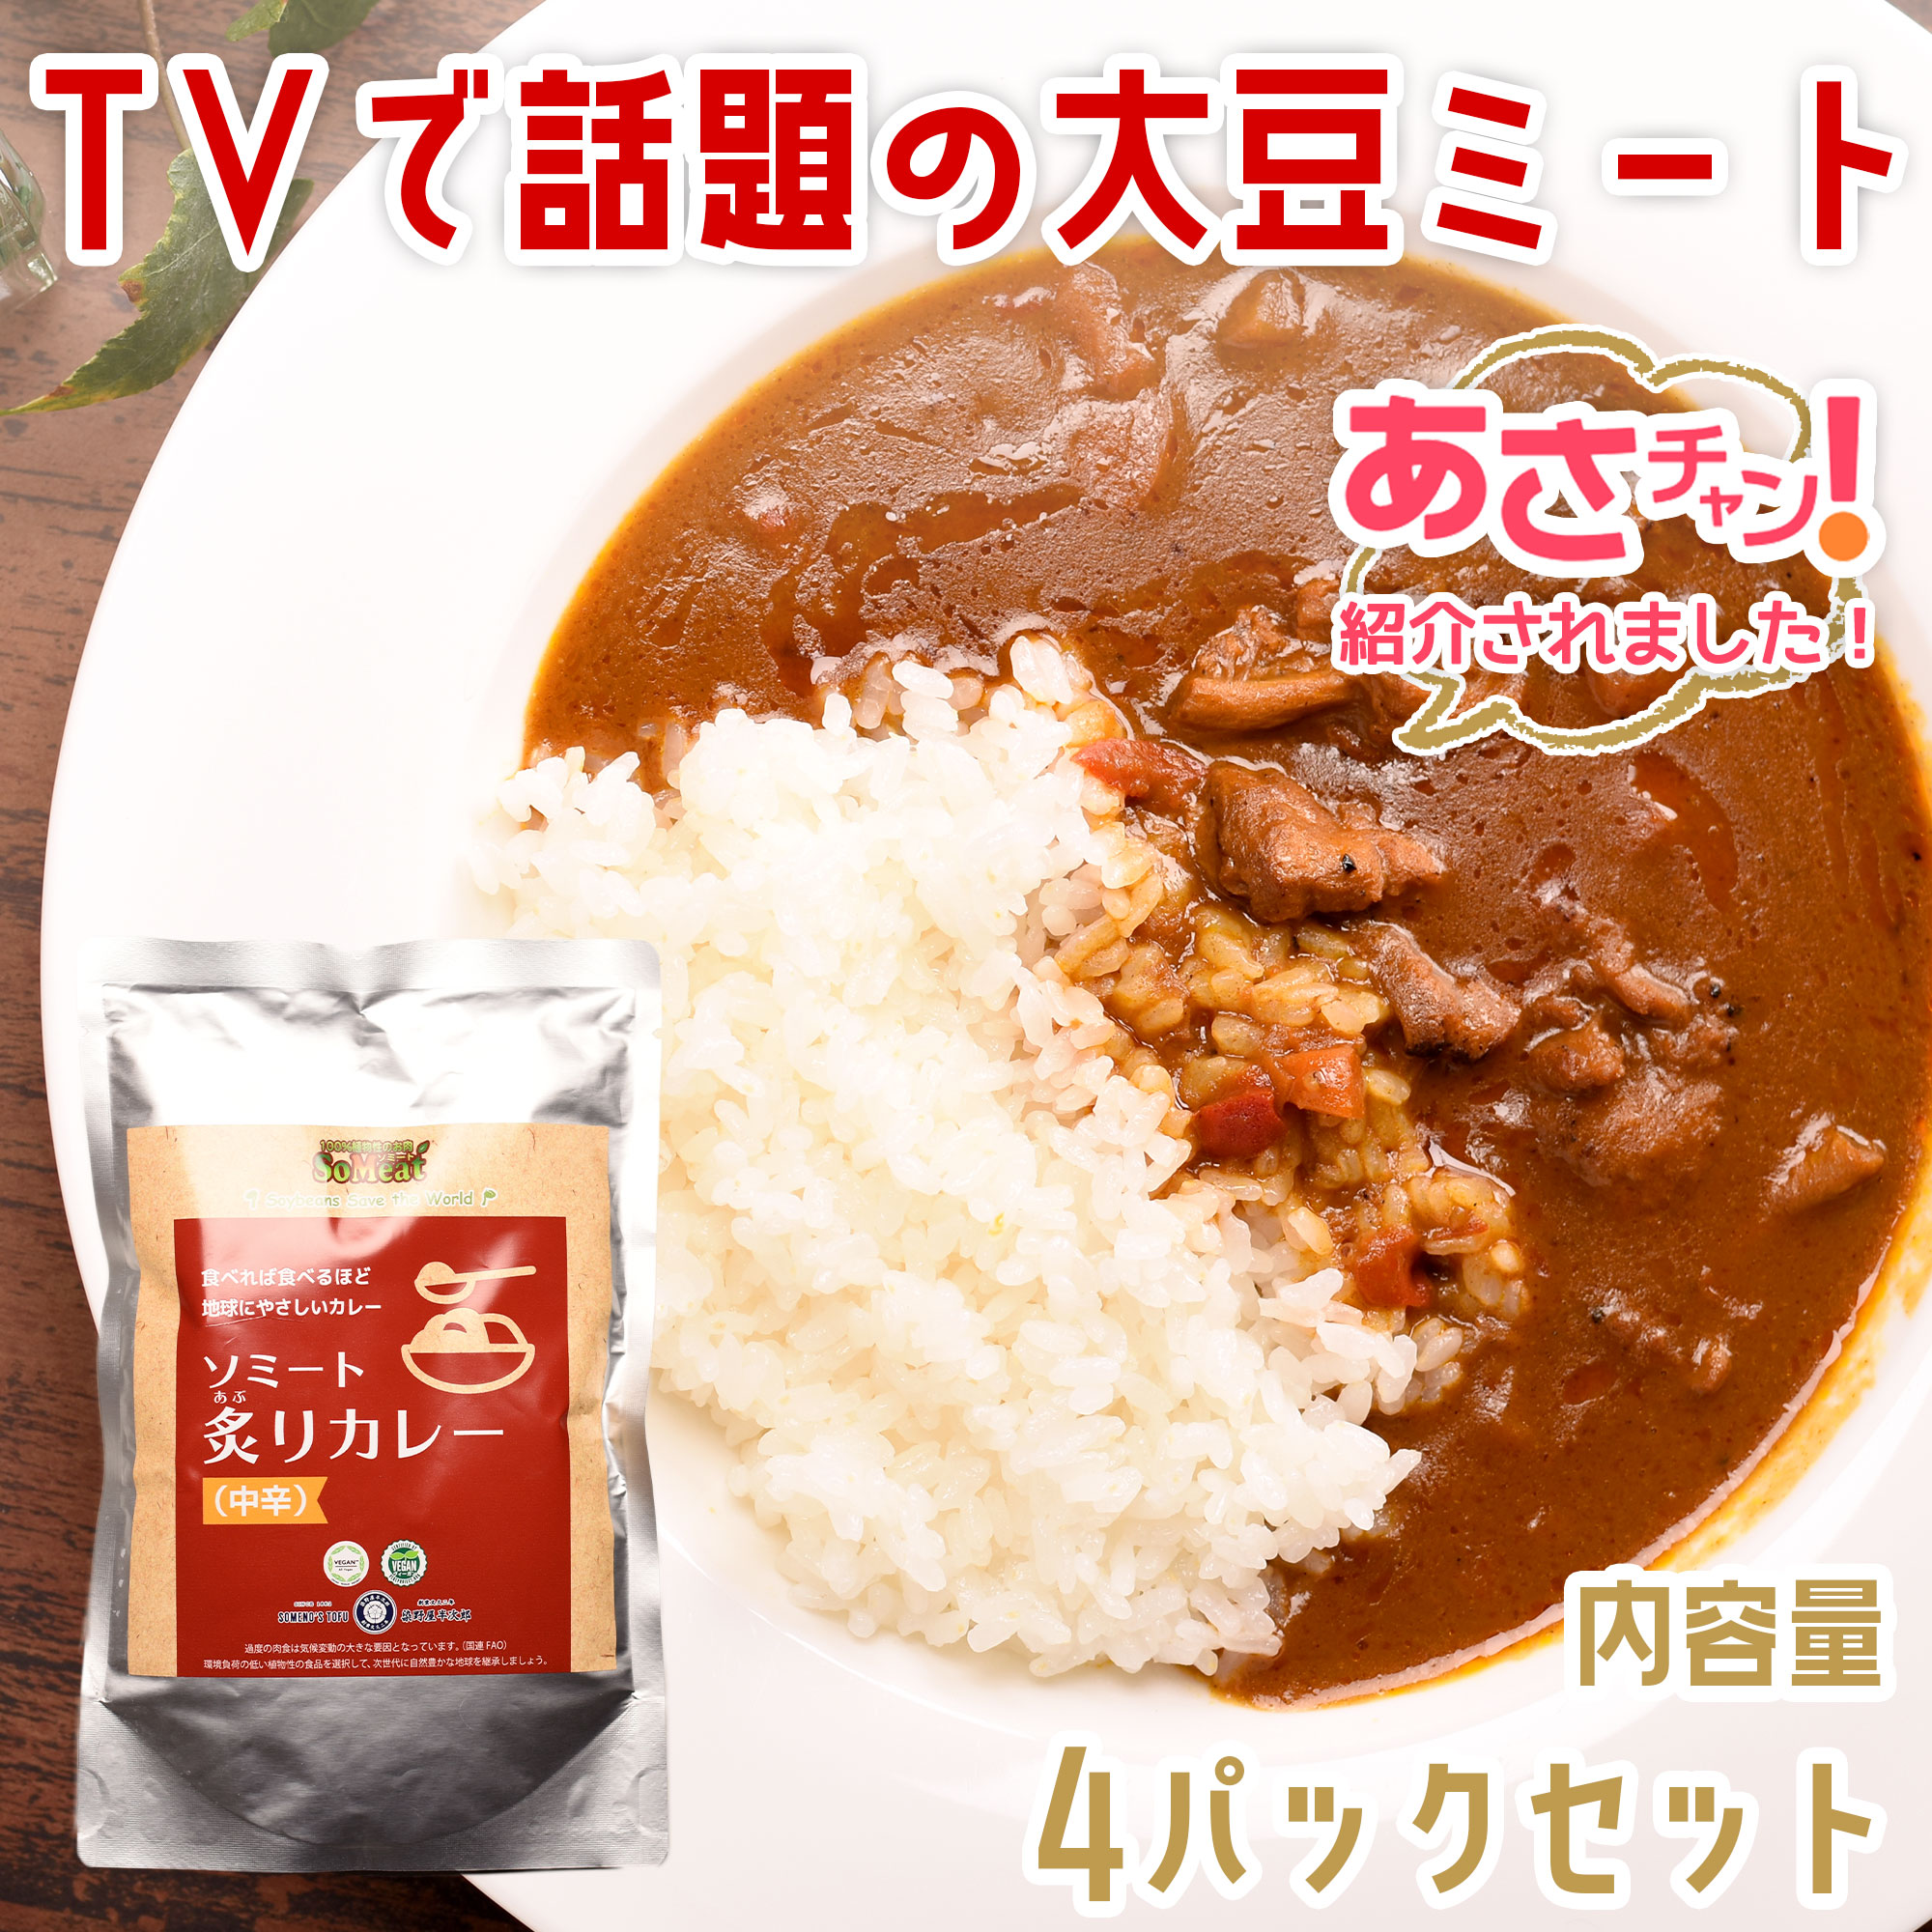 Aburiyaki (Grilled) Curry